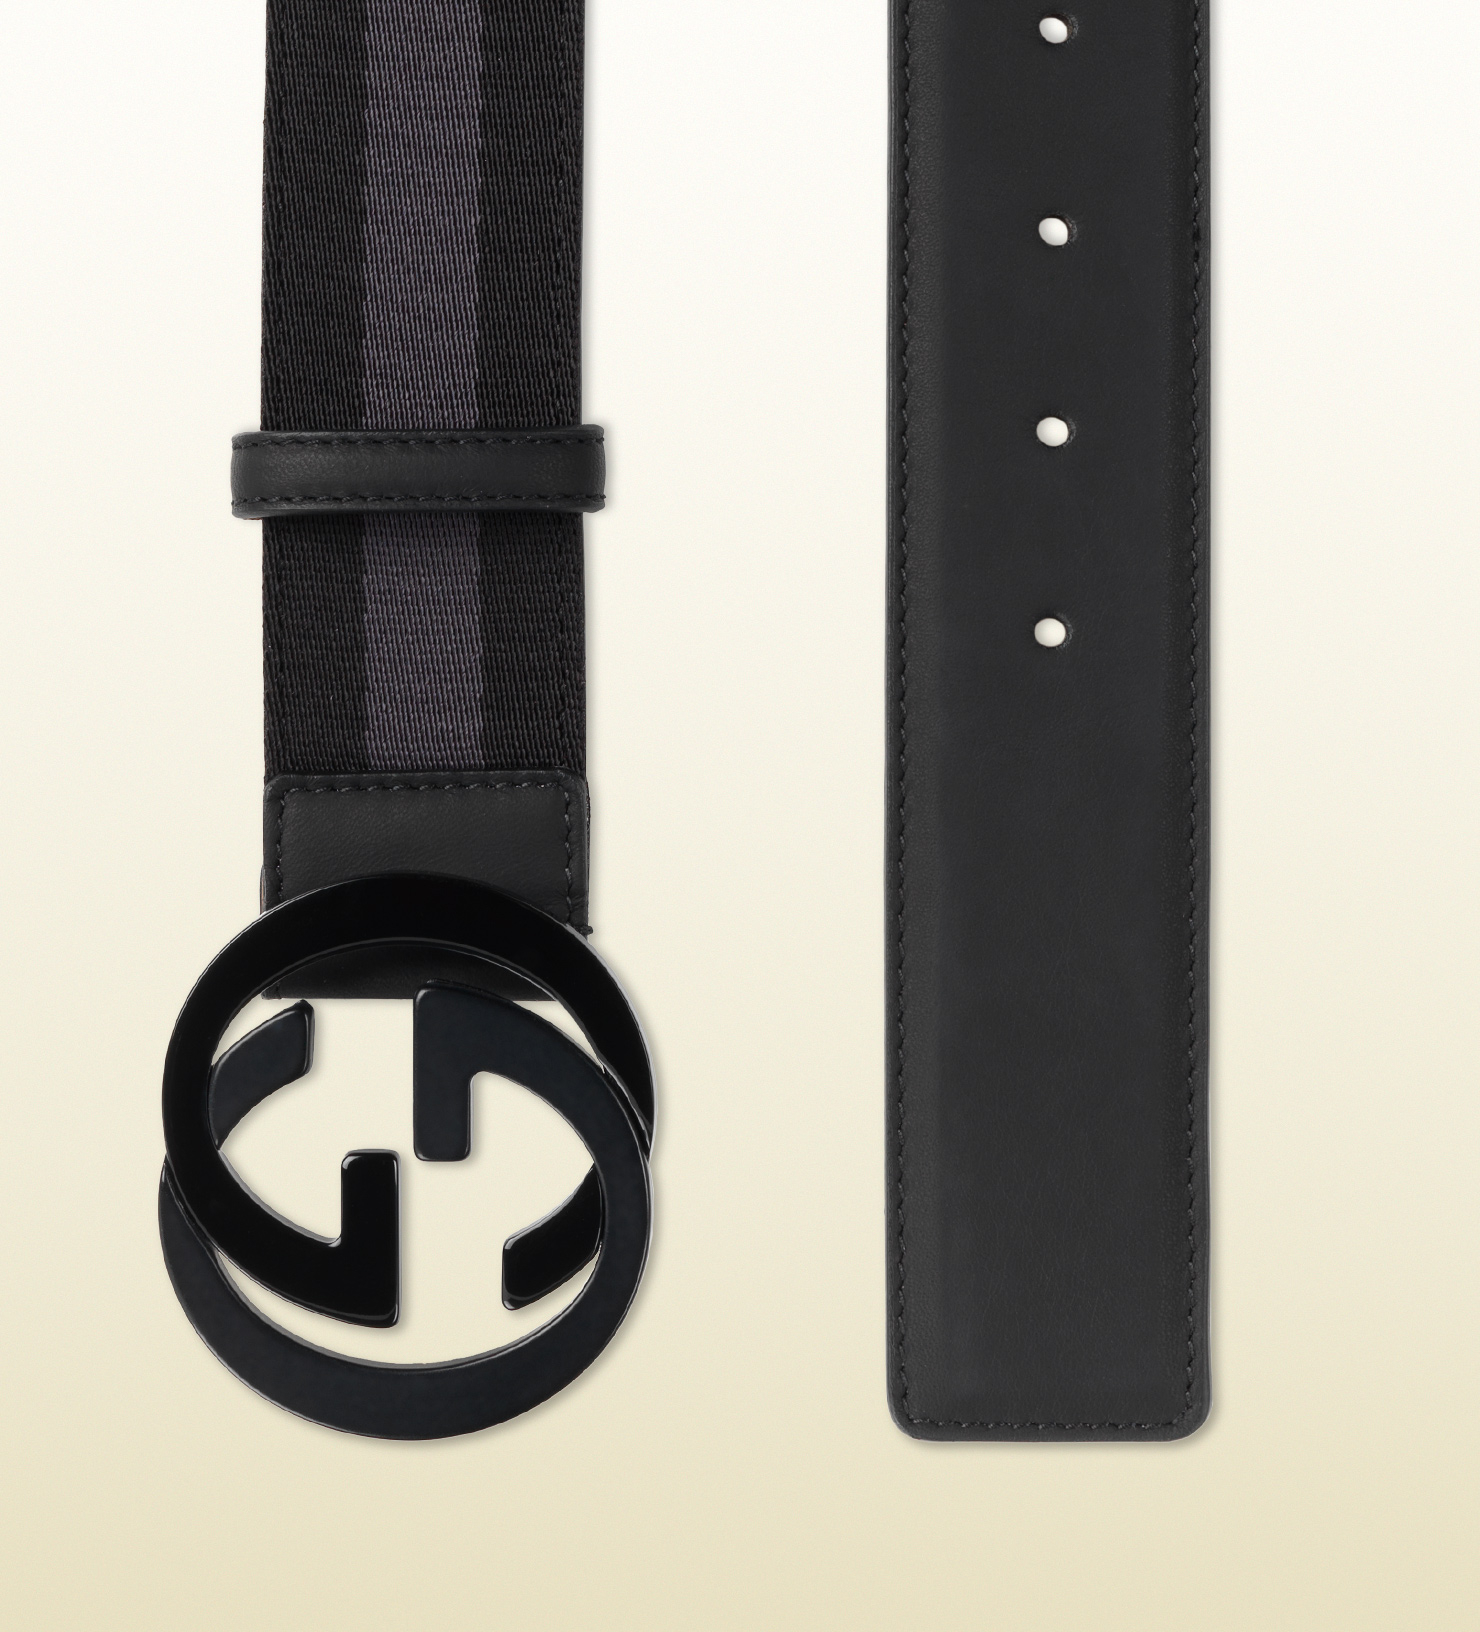 Lyst - Gucci Belt With Interlocking G Buckle in Black for Men